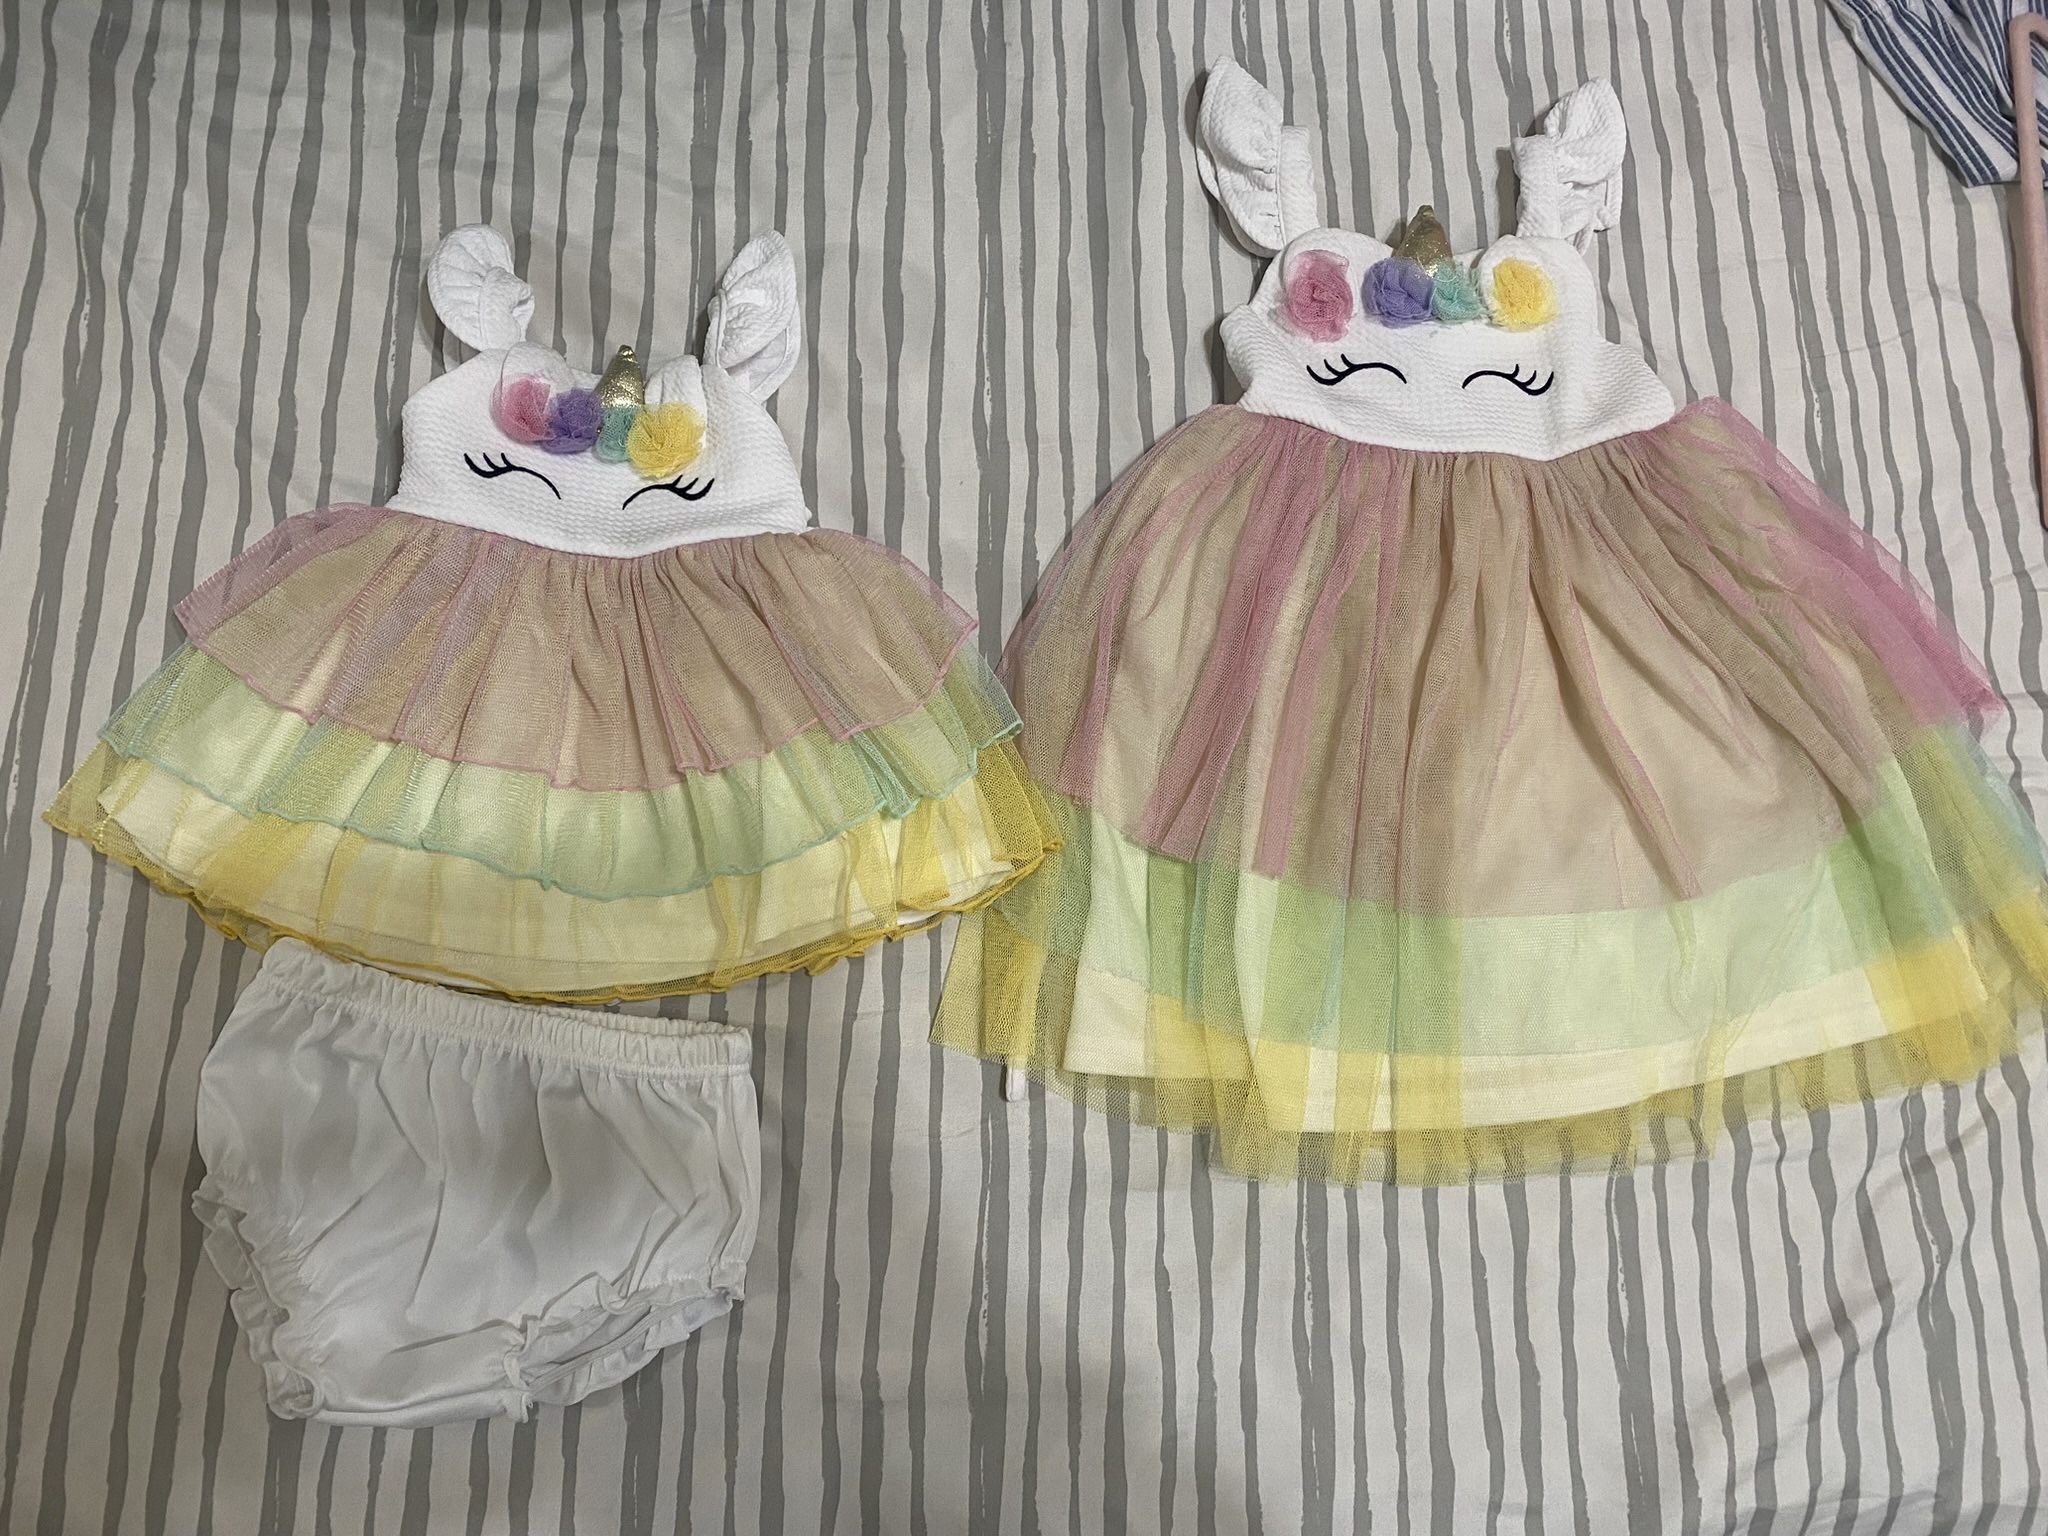 Girls Unicorn Dresses Sister Set